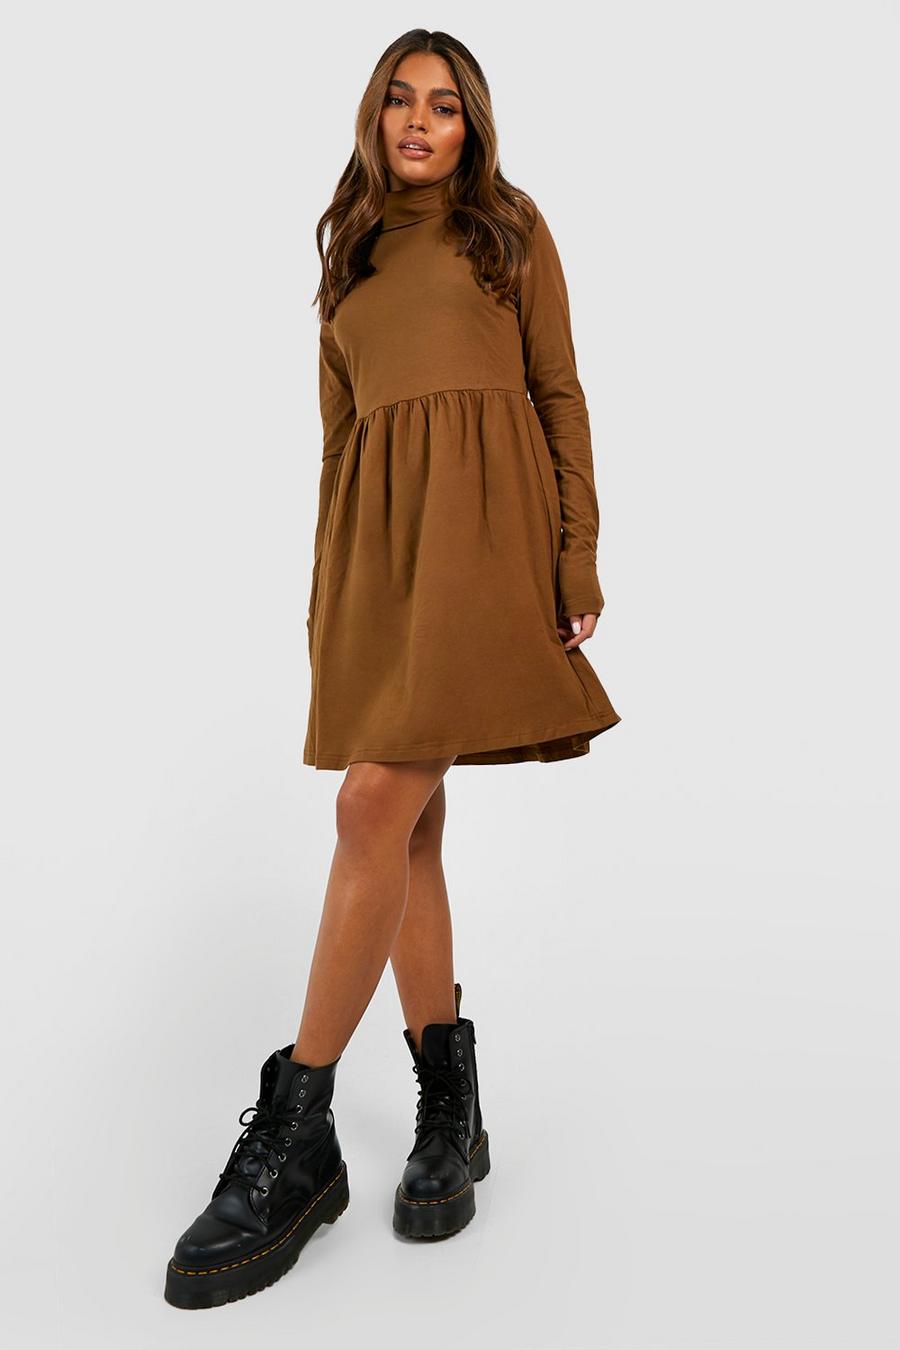 Chocolate brown Basic Turtleneck Long Sleeve Skater Dress